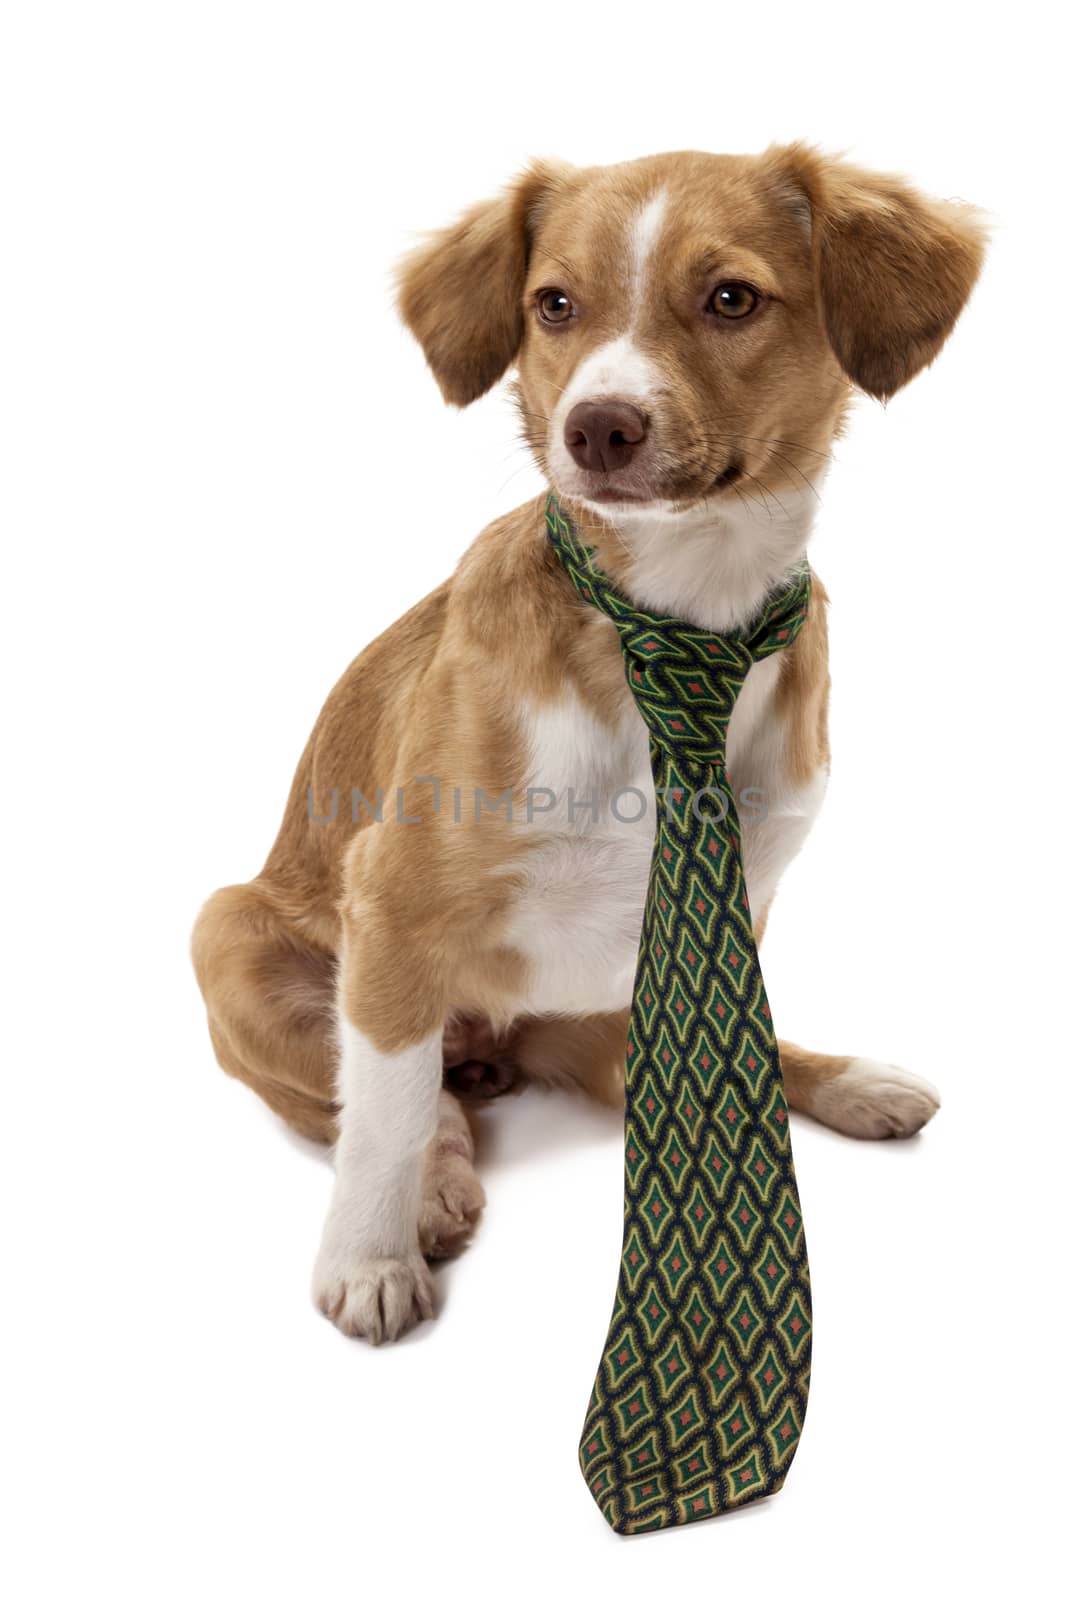 Cute dog wearing necktie by Aarstudio